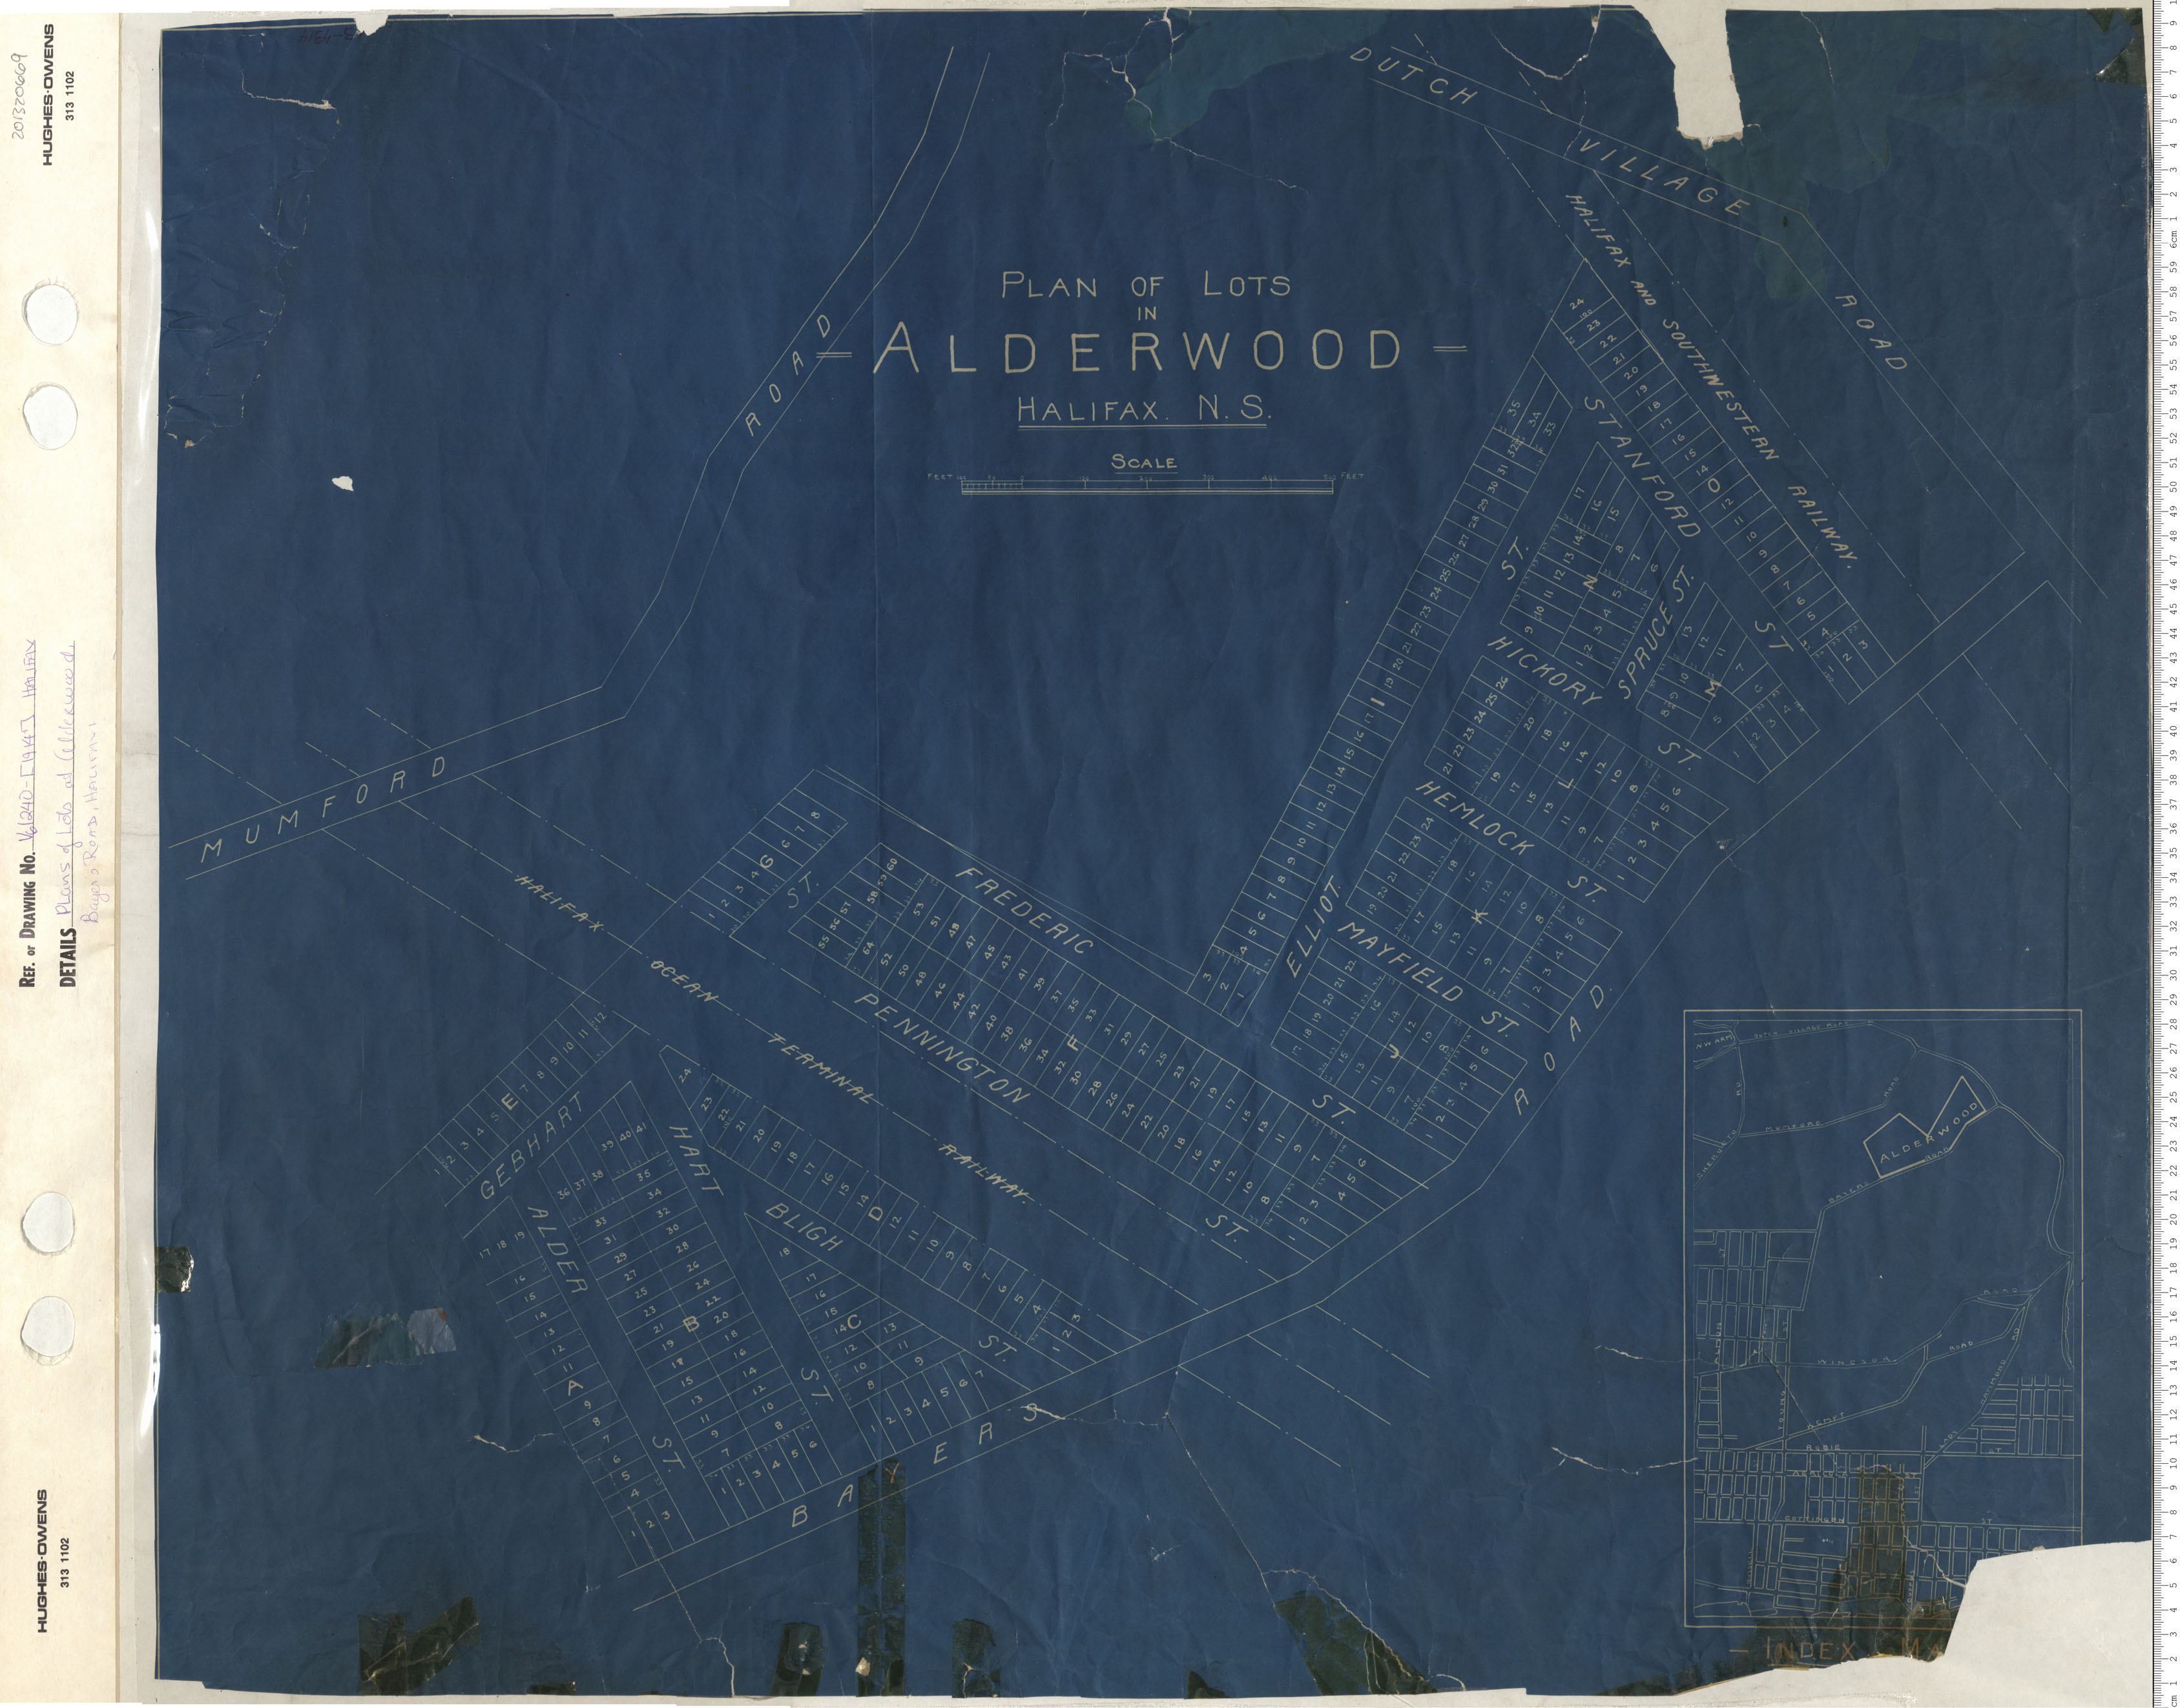 Plan of lots at Alderwood, Bayer's Road Halifax